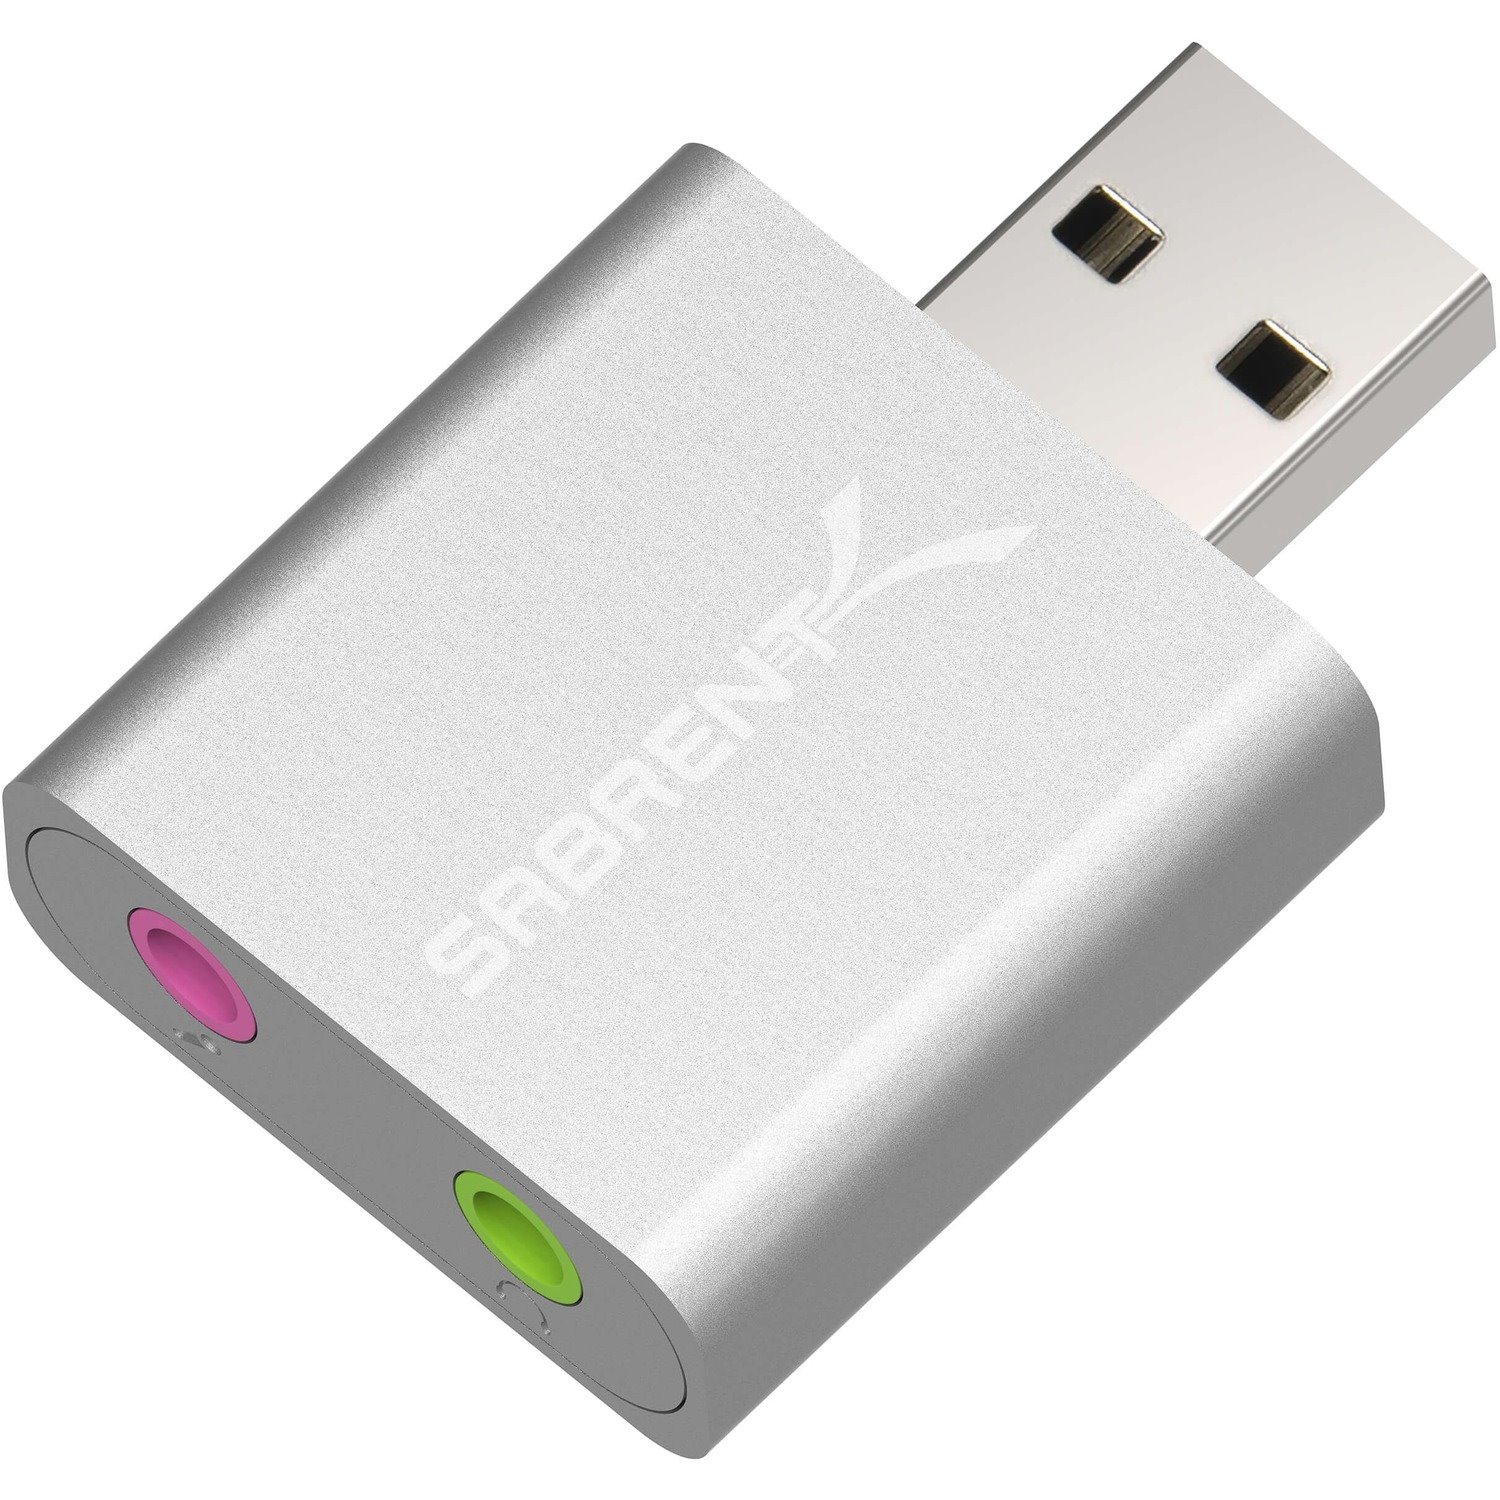 Sabrent USB Aluminum External Stereo Sound Adapter | Silver